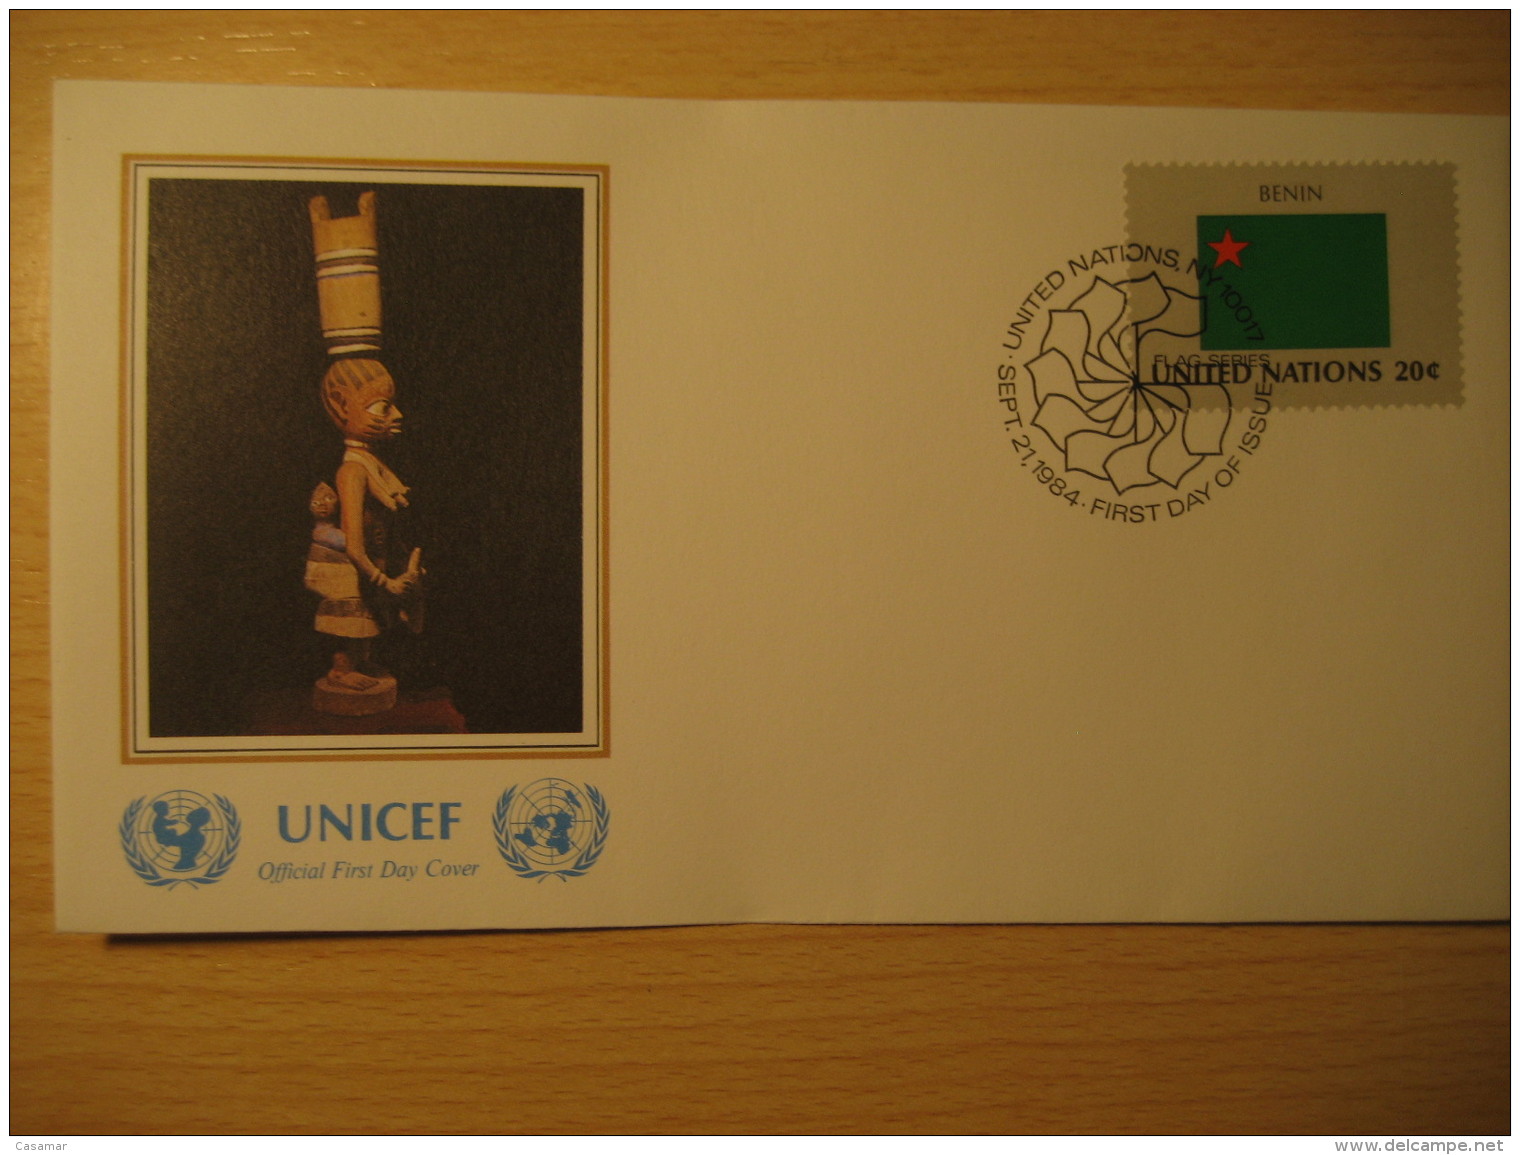 BENIN New York 1984 FDC Cancel UNICEF Cover UNITED NATIONS UN NY Flag Series Flags Yoruba Tribe - Bénin – Dahomey (1960-...)